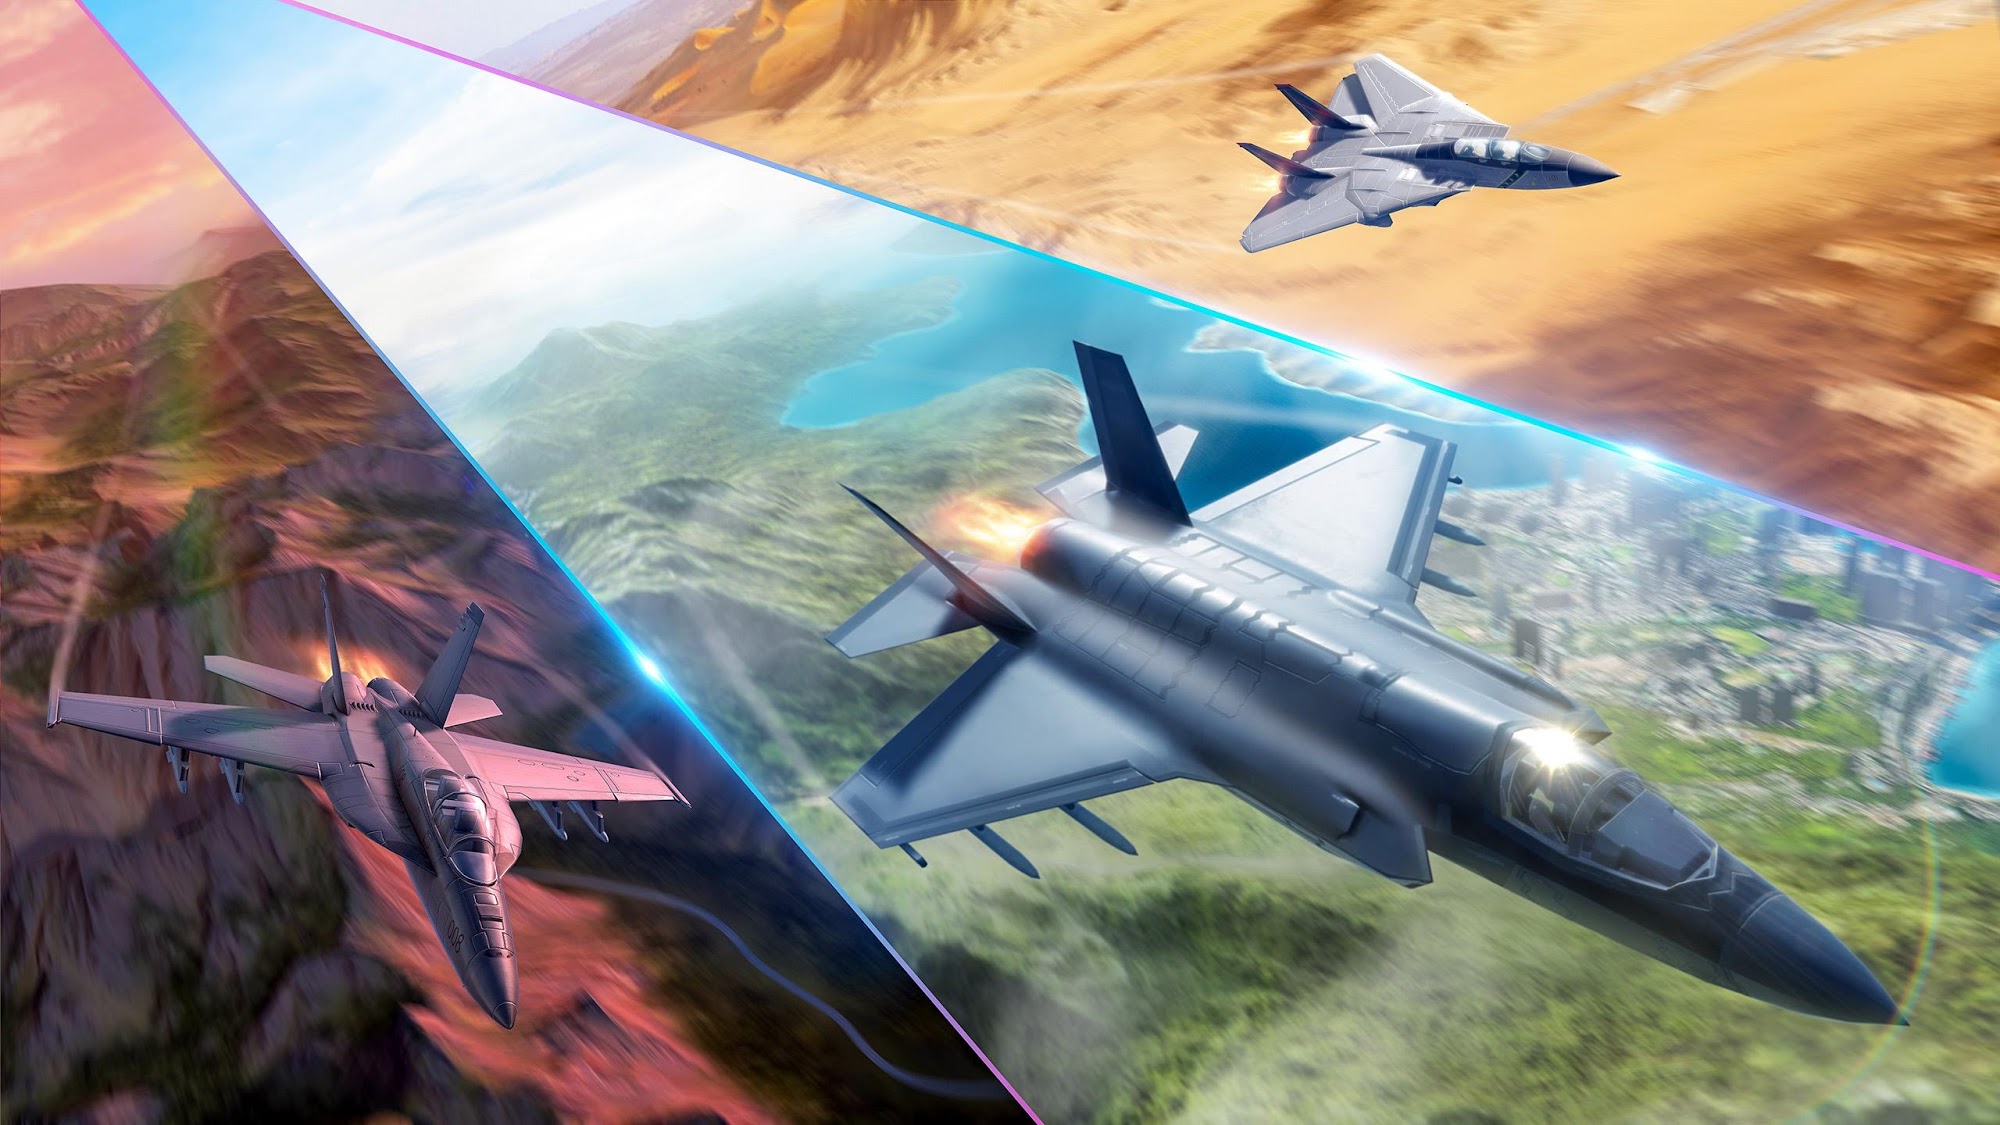 Sky Combat: war planes online simulator PVP スクリーンショット1